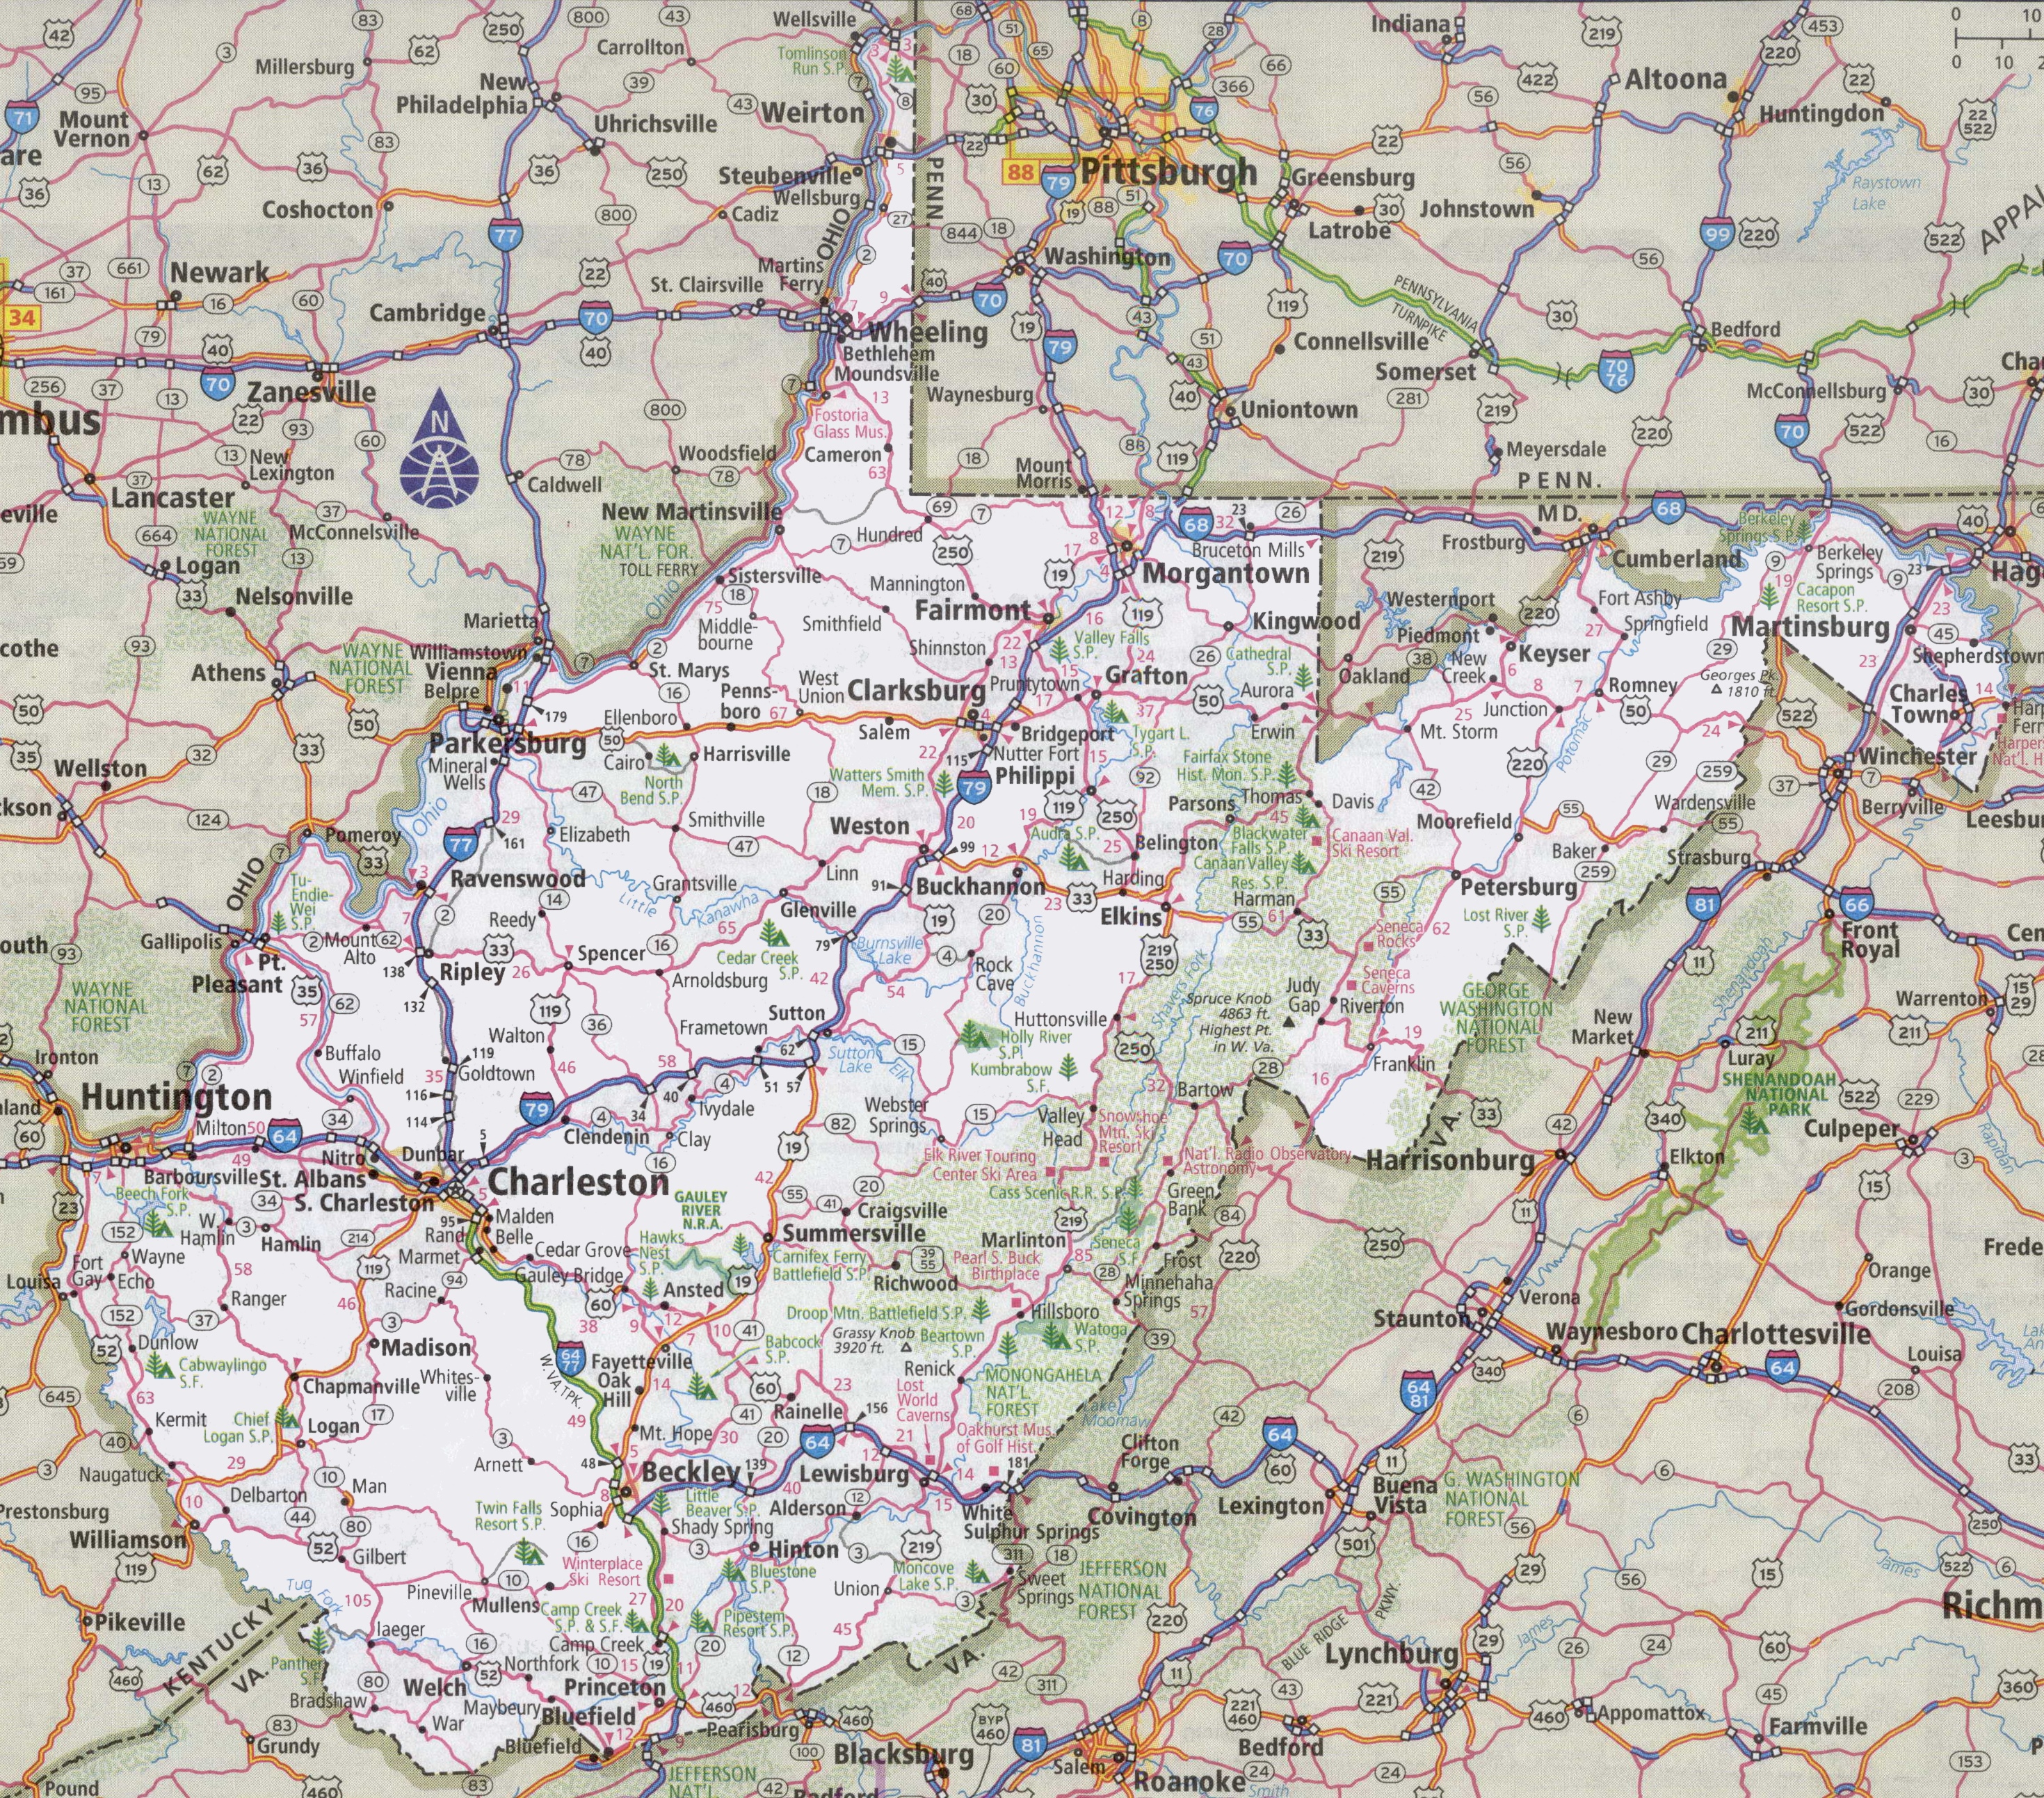 West Virginia Road Map